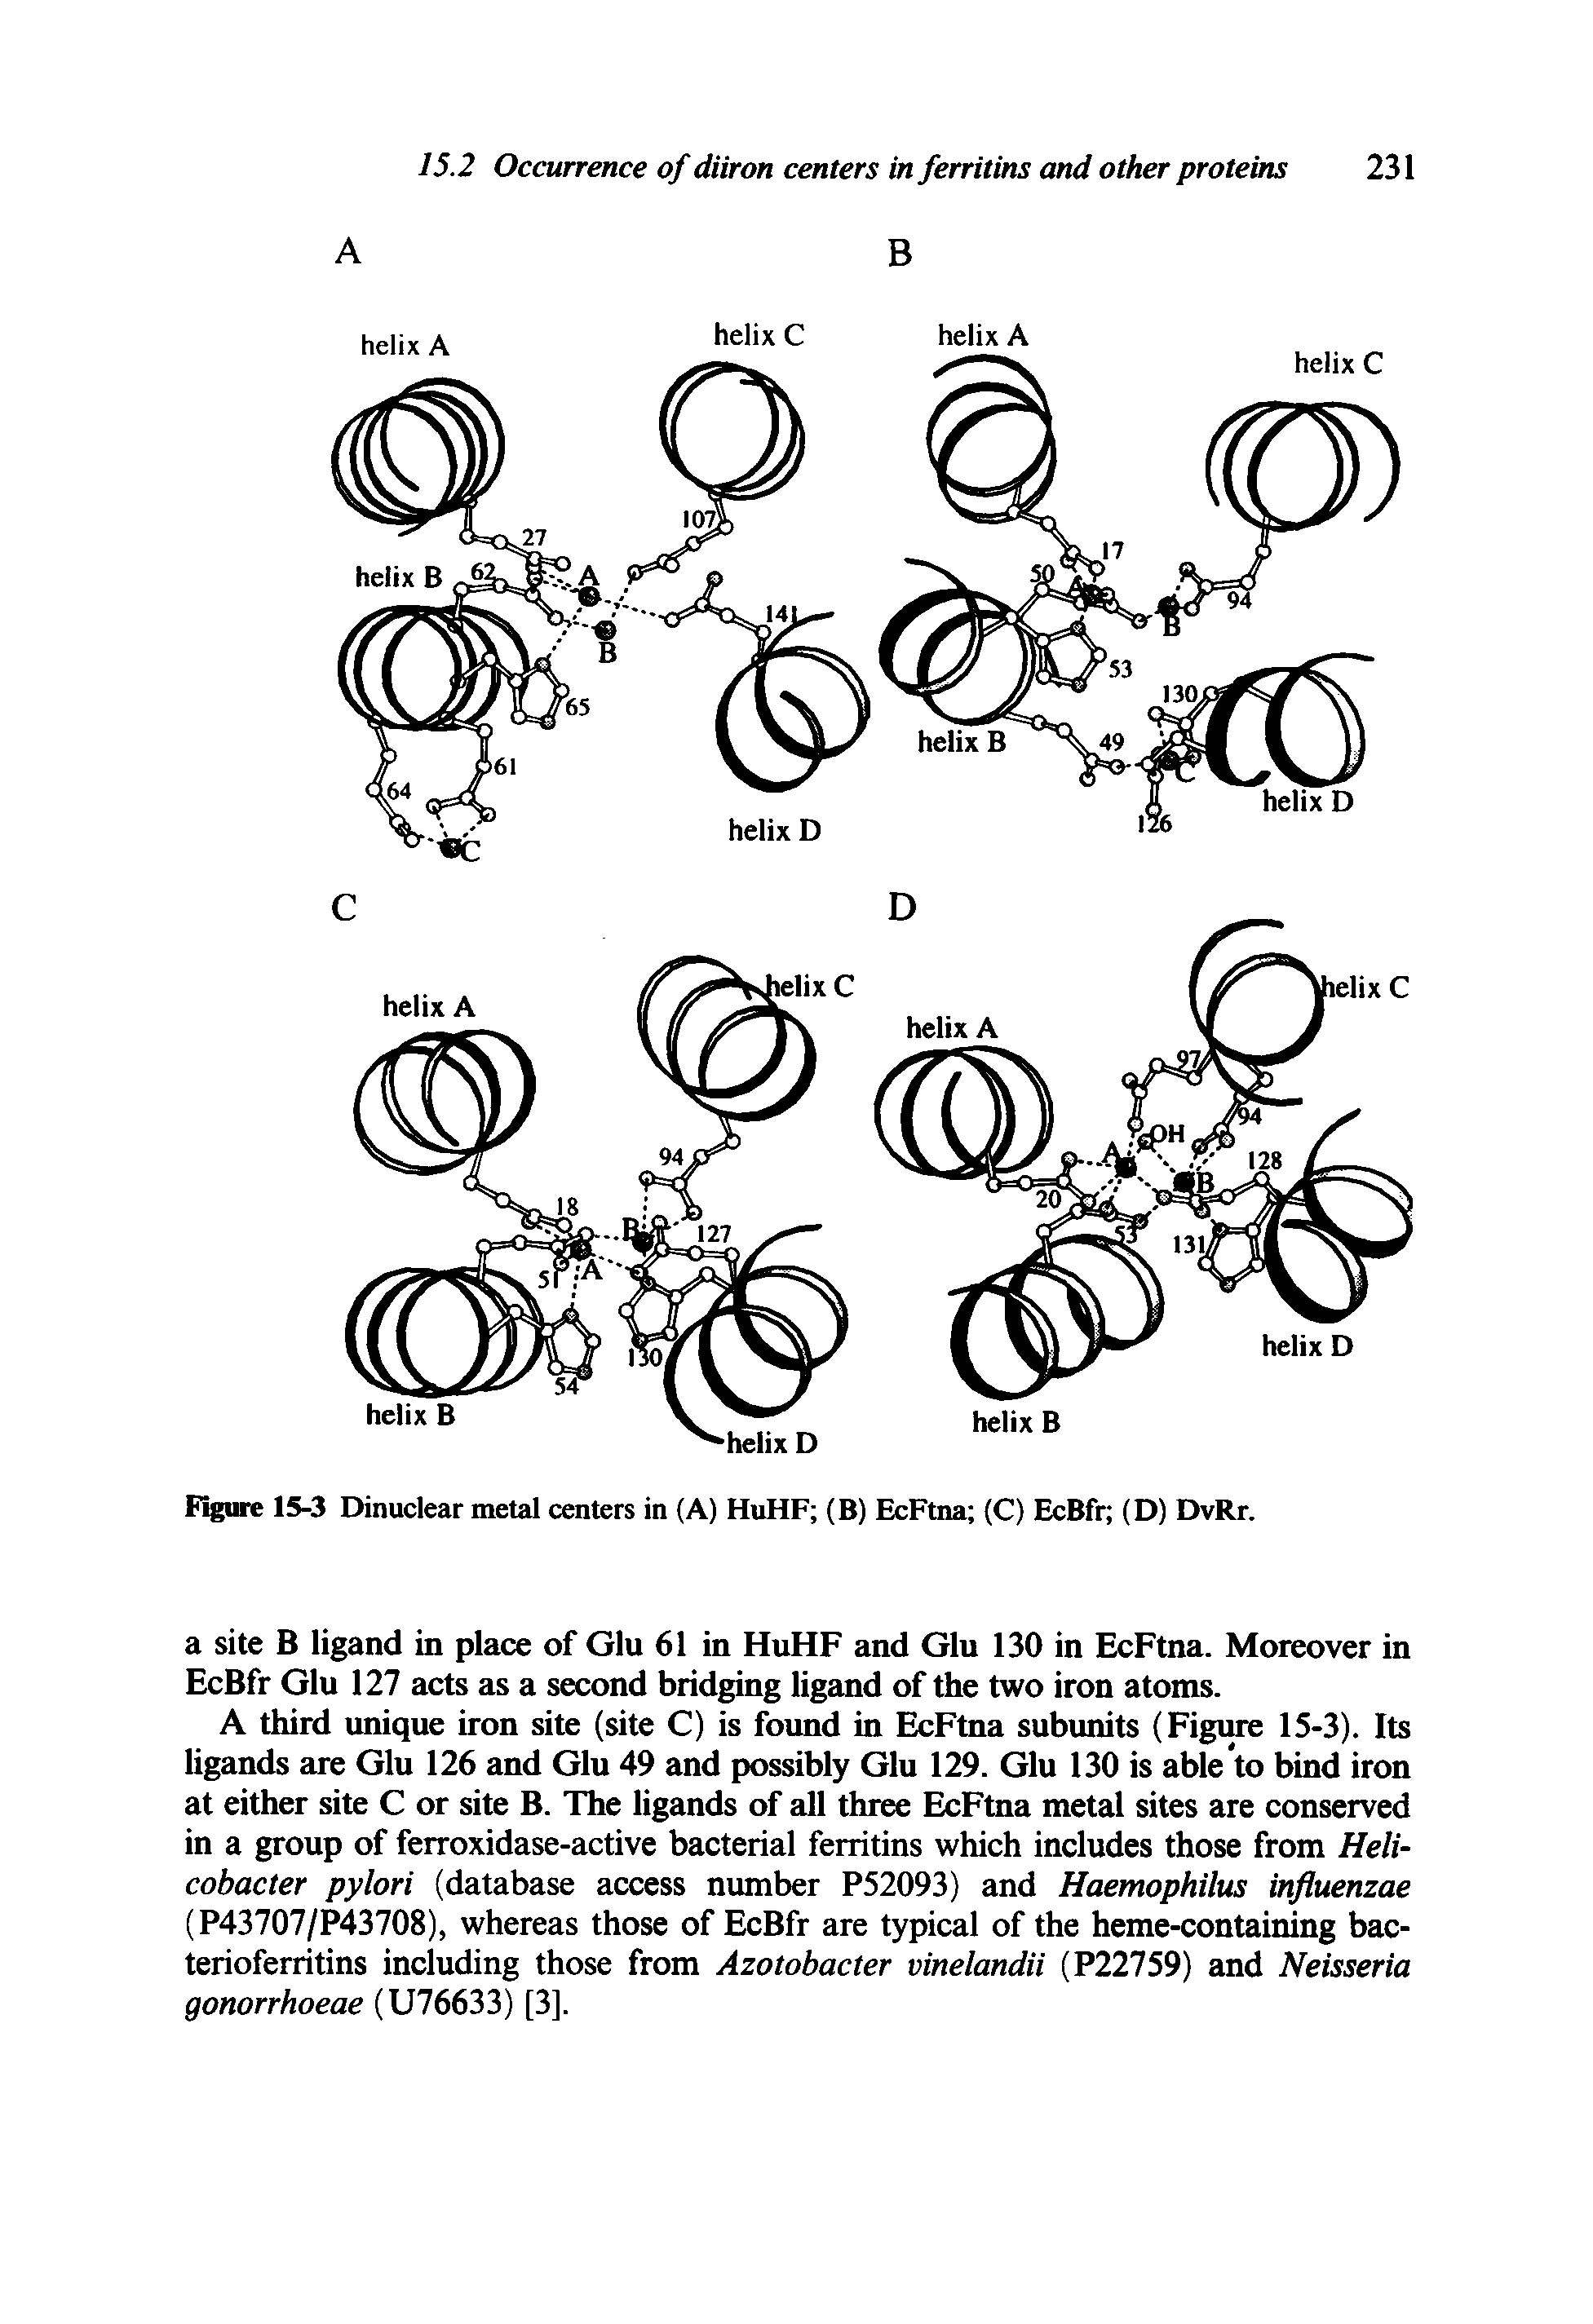 Figure 15-3 Dinuclear metal centers in (A) HuHF (B) EcFtna (C) EcBfr (D) DvRr.